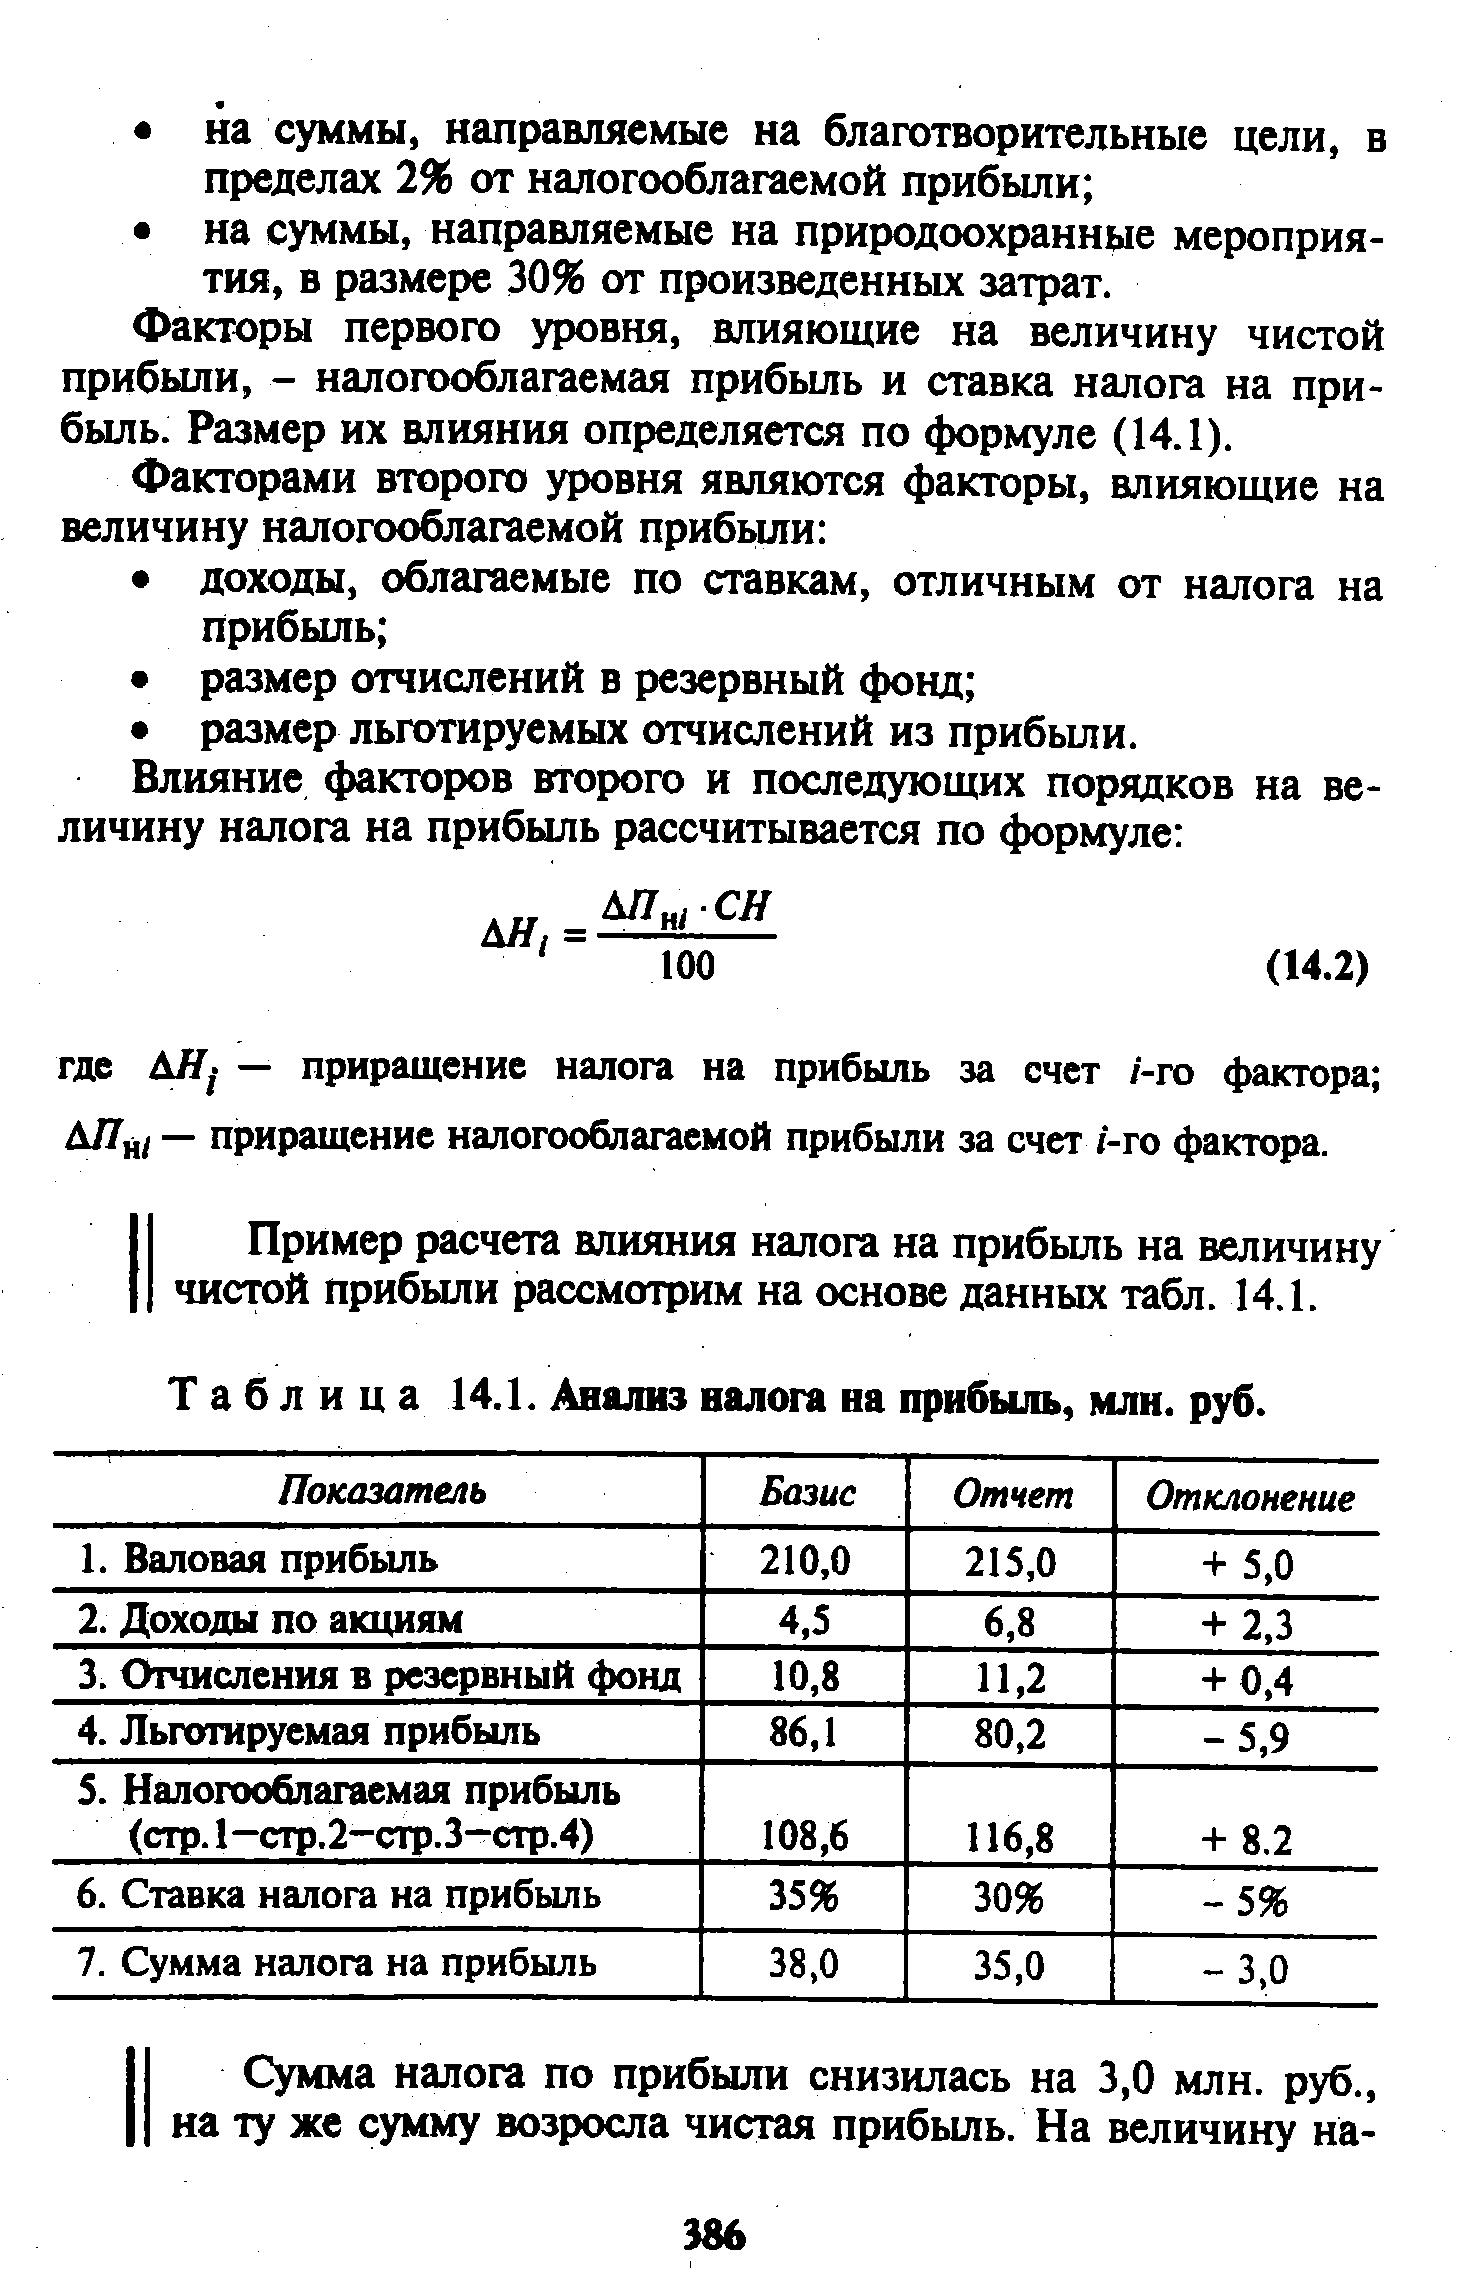 Таблица 14.1. Анализ налога на прибыль, млн. руб.
